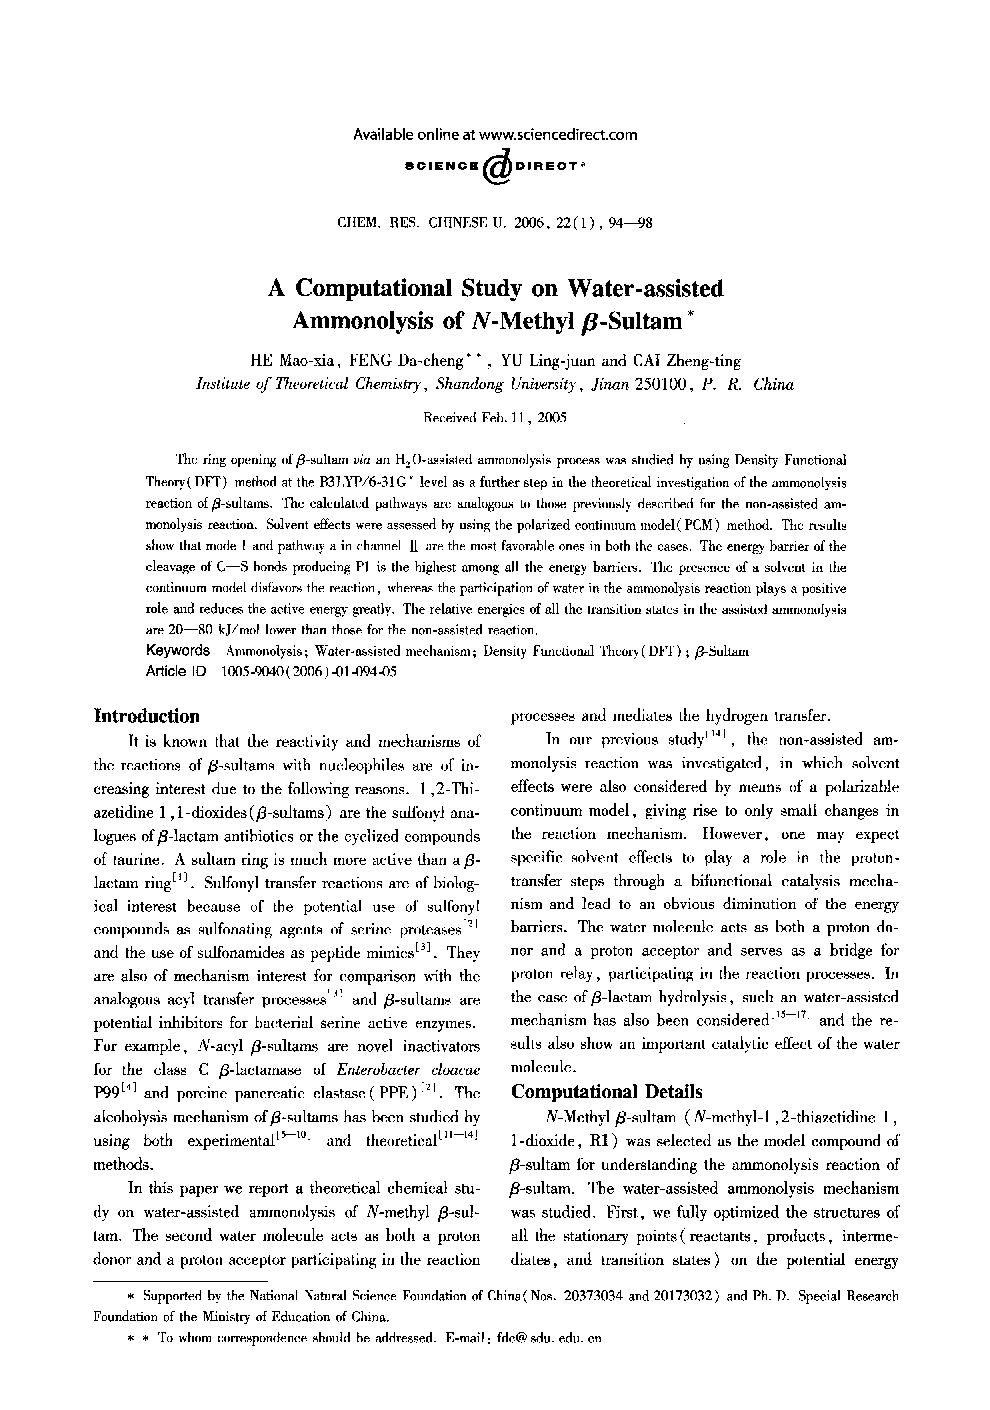 A Computational Study on Water-assisted Ammonolysis of N-Methyl Î²-Sultam1